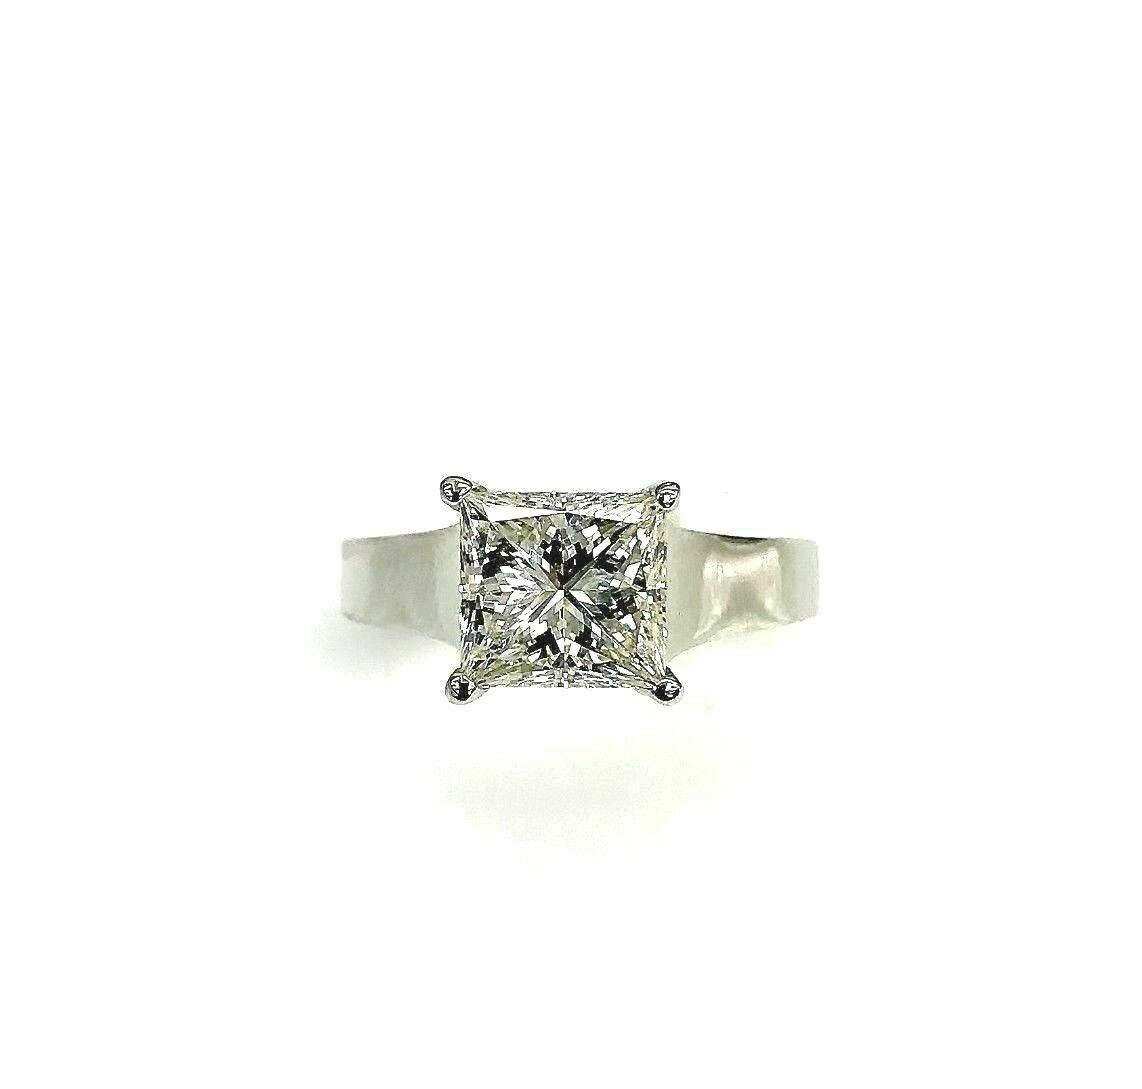 2.13 Carats Princess Cut Diamond Solitaire Wedding Ring EGLUSA $28,400 Appraisal